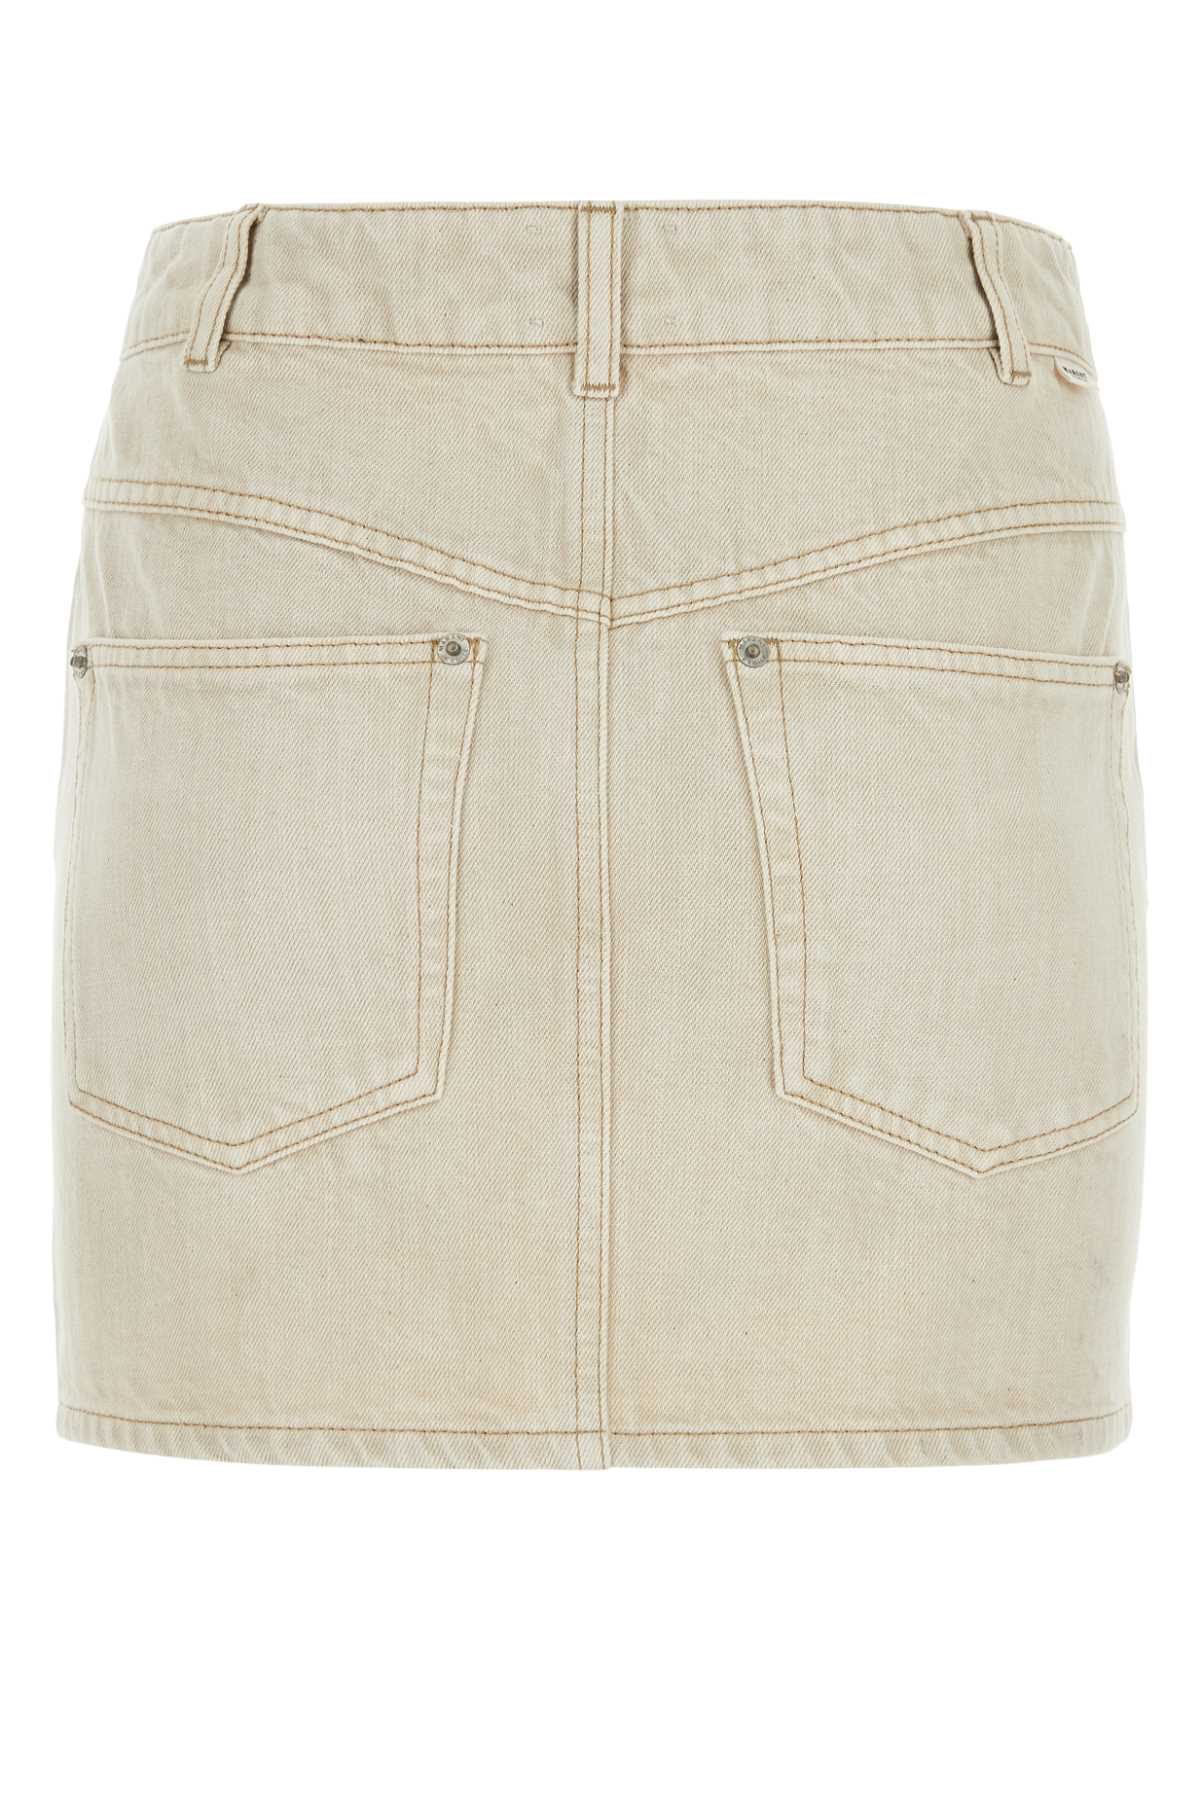 Marant Etoile Sand Denim Vesna Mini Skirt In Ecru